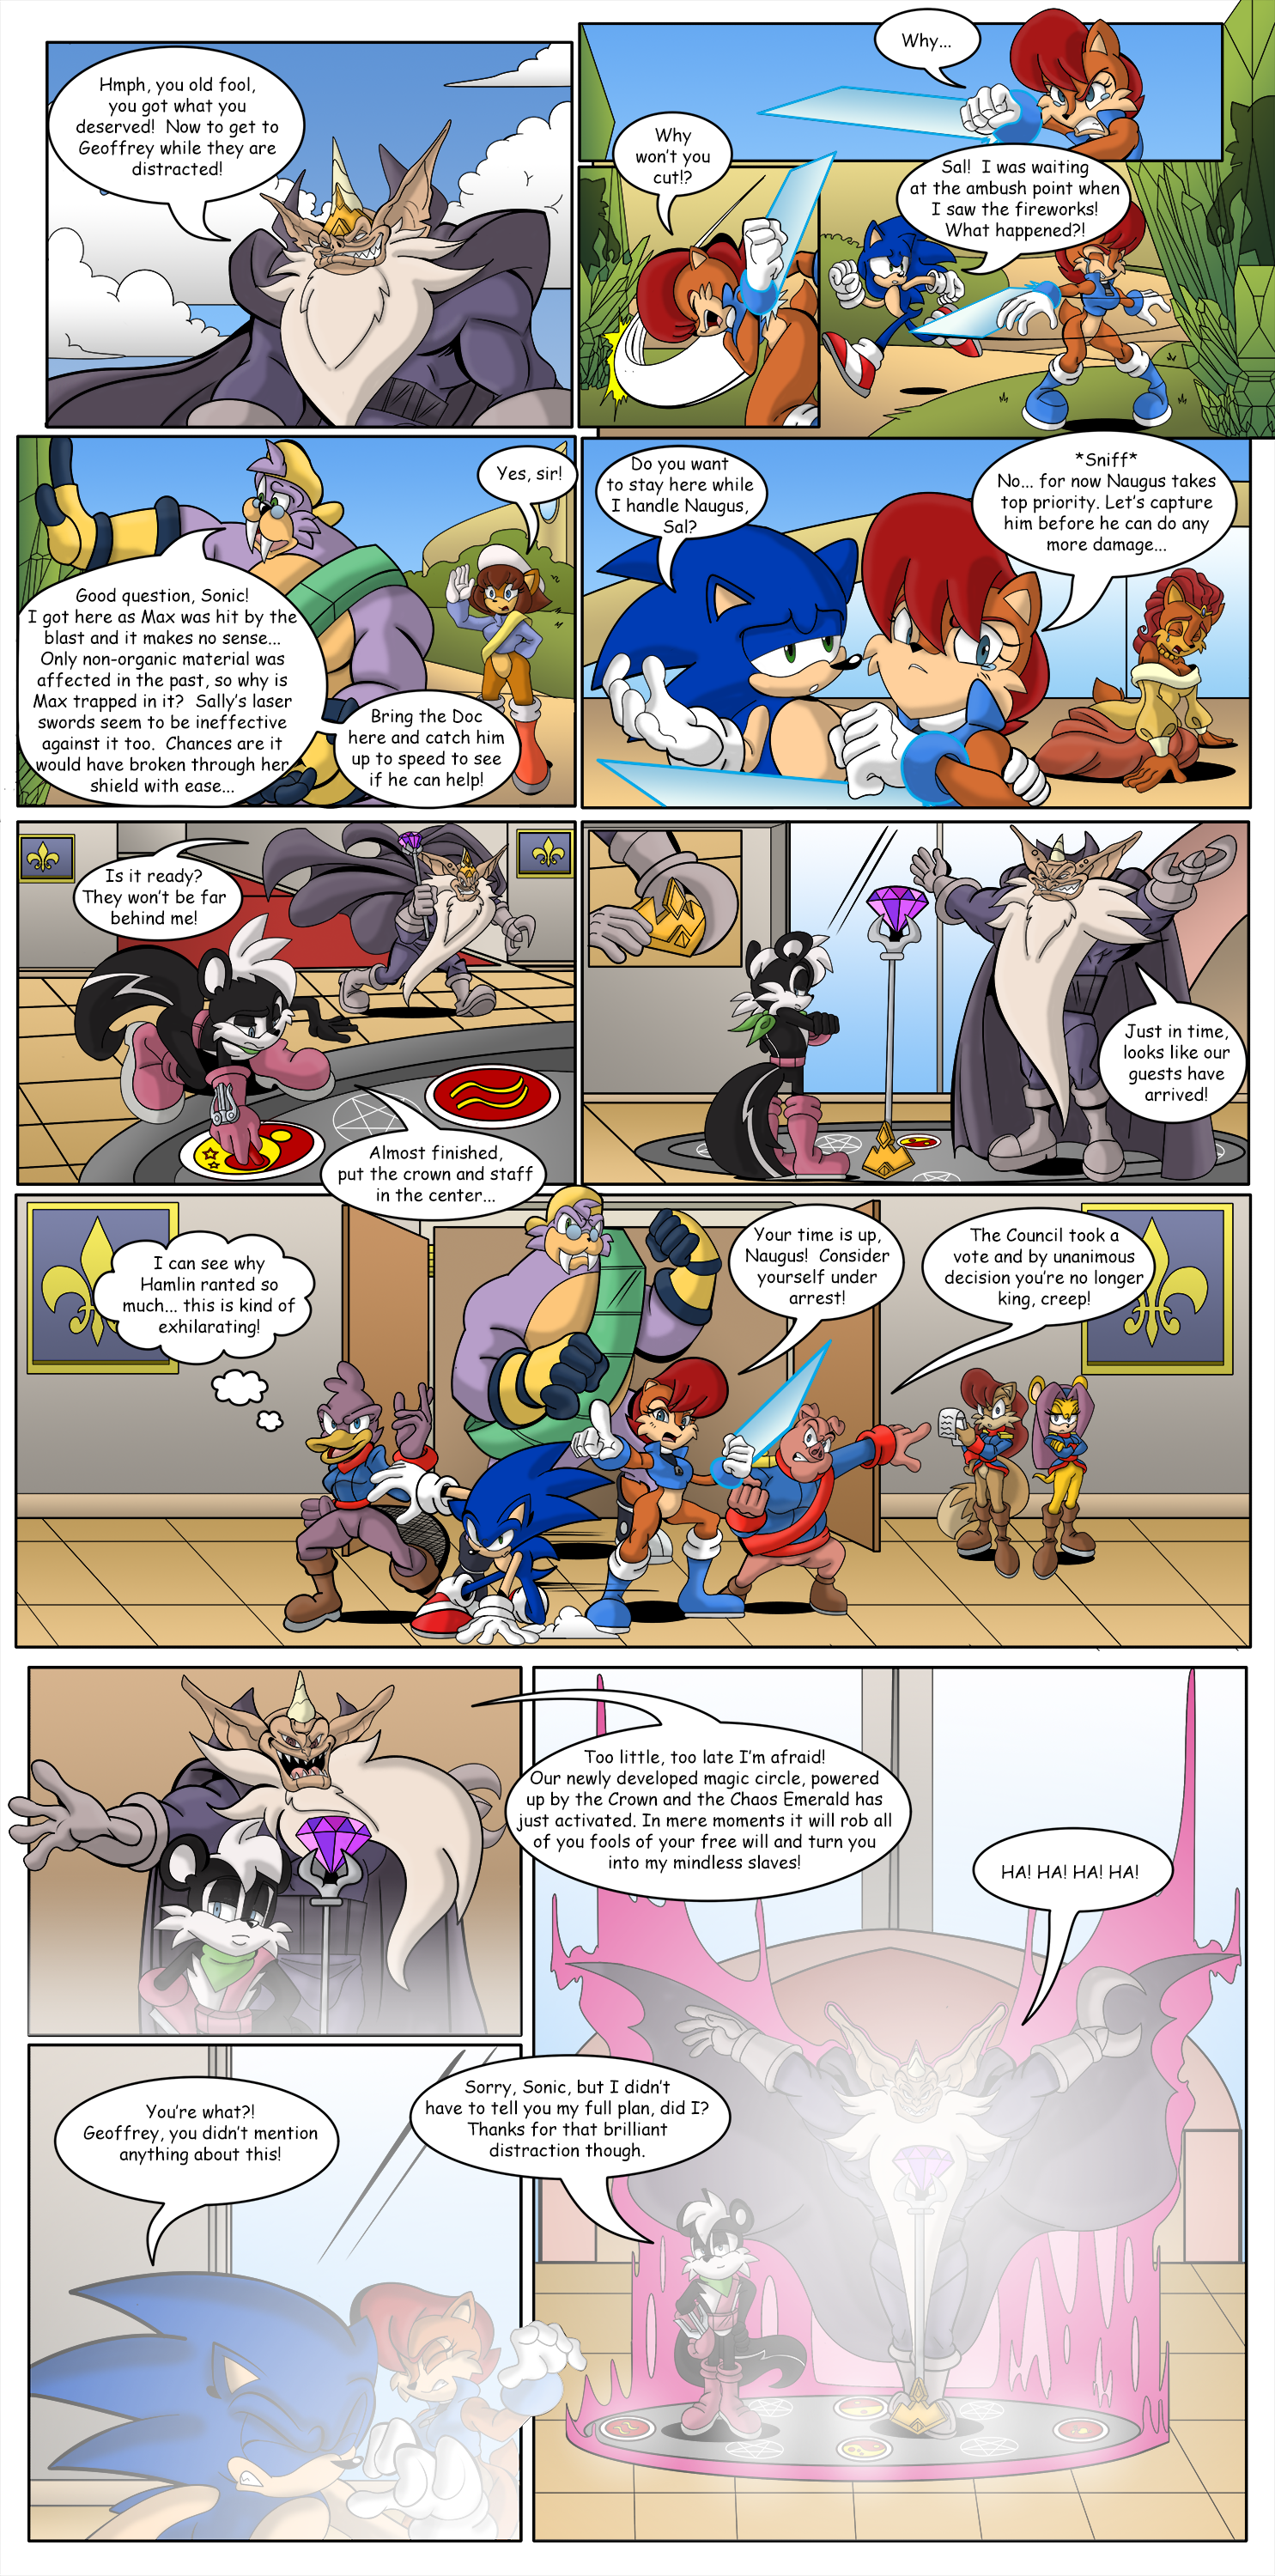 Sonic the Hedgehog 4 Episode II by gameboysage -- Fur Affinity [dot] net